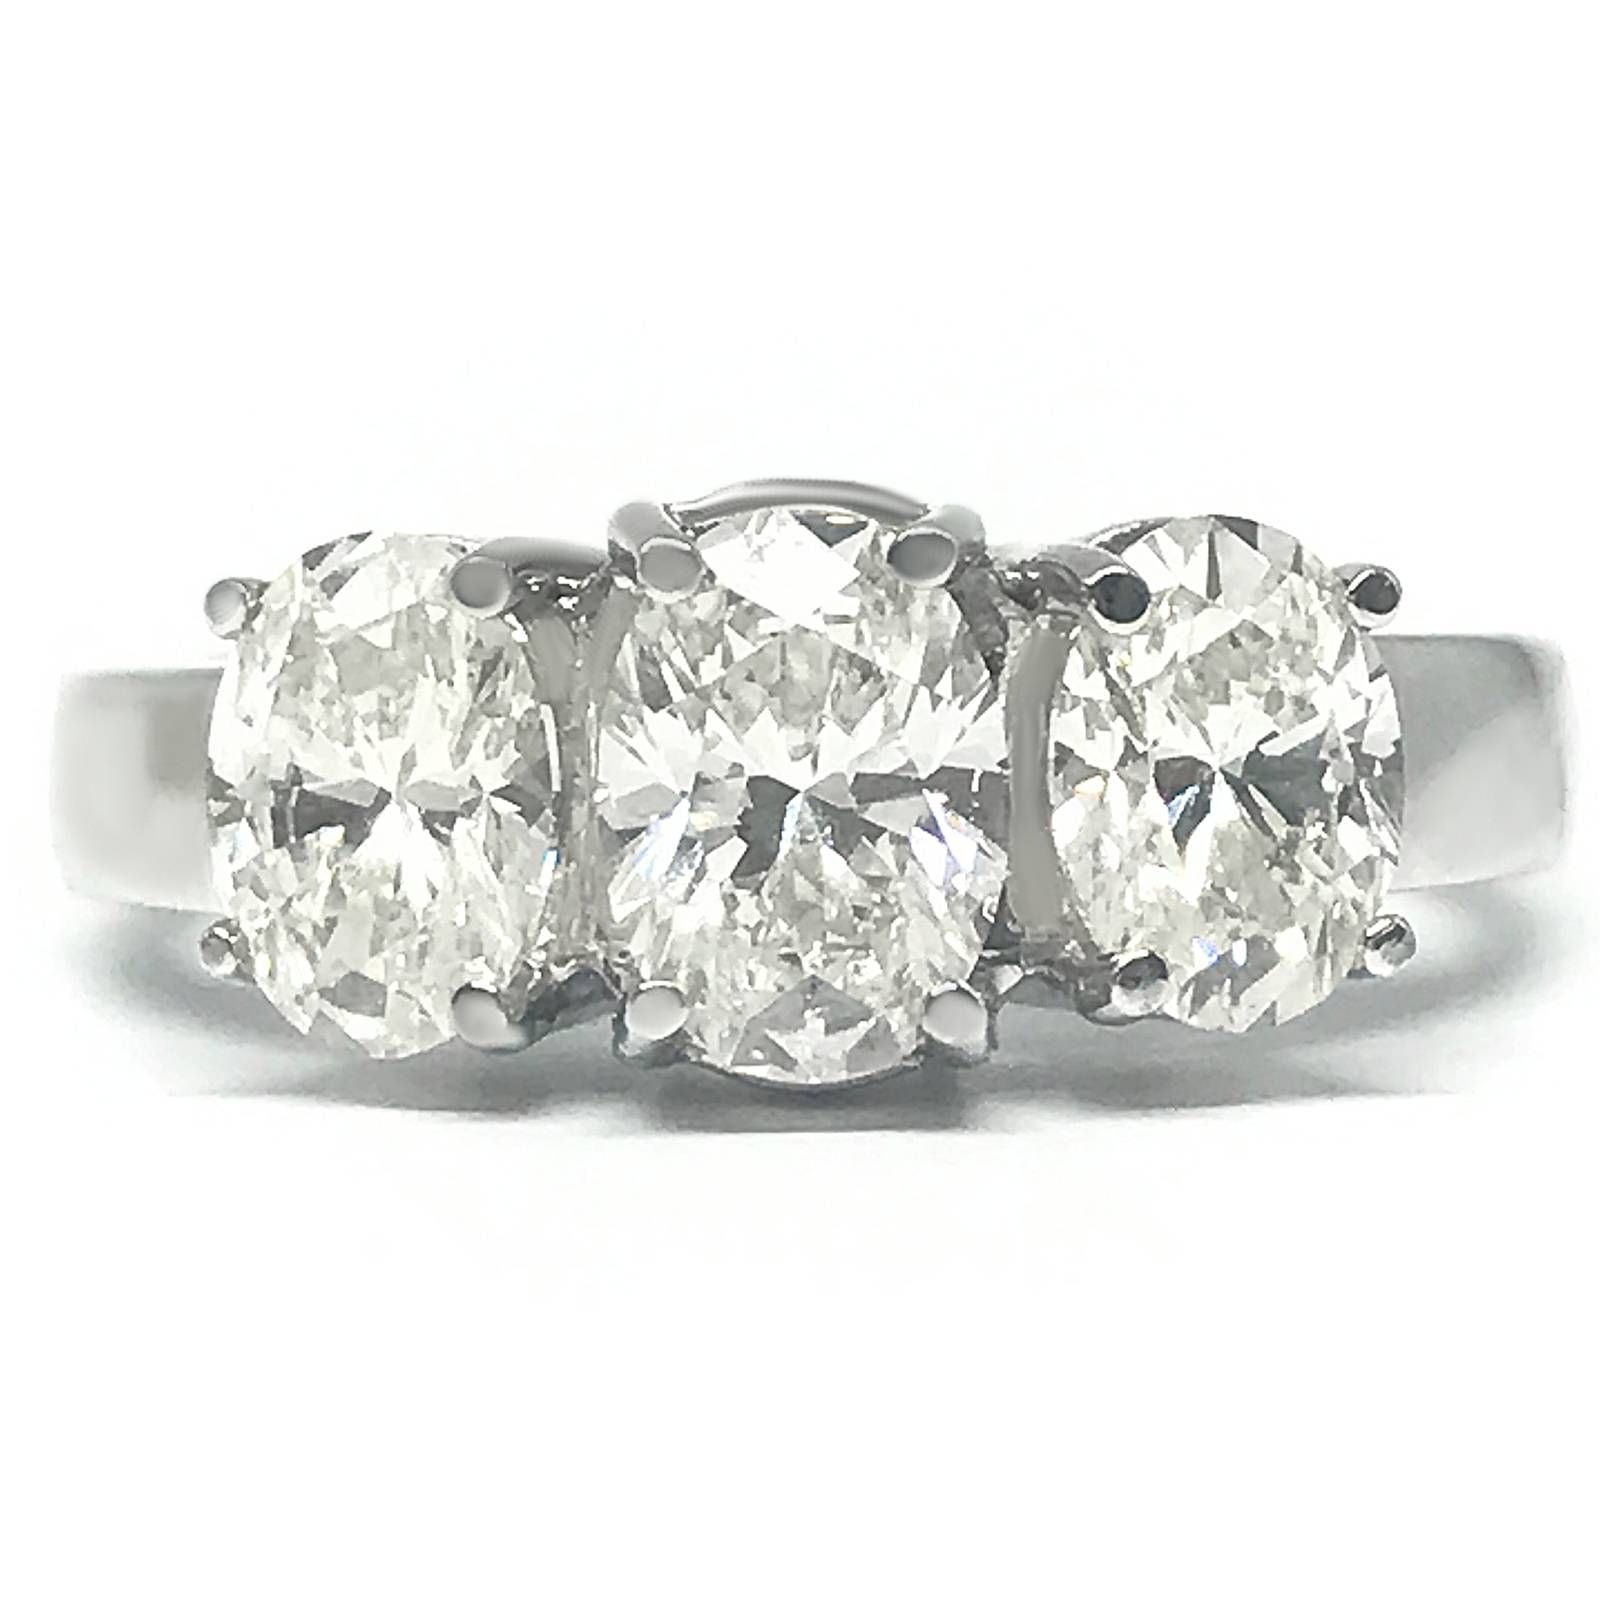 Buy Ladies Diamond Anniversary Rings Online In Usa – Fashion Regarding Most Recent 3 Diamond Anniversary Rings (View 14 of 25)